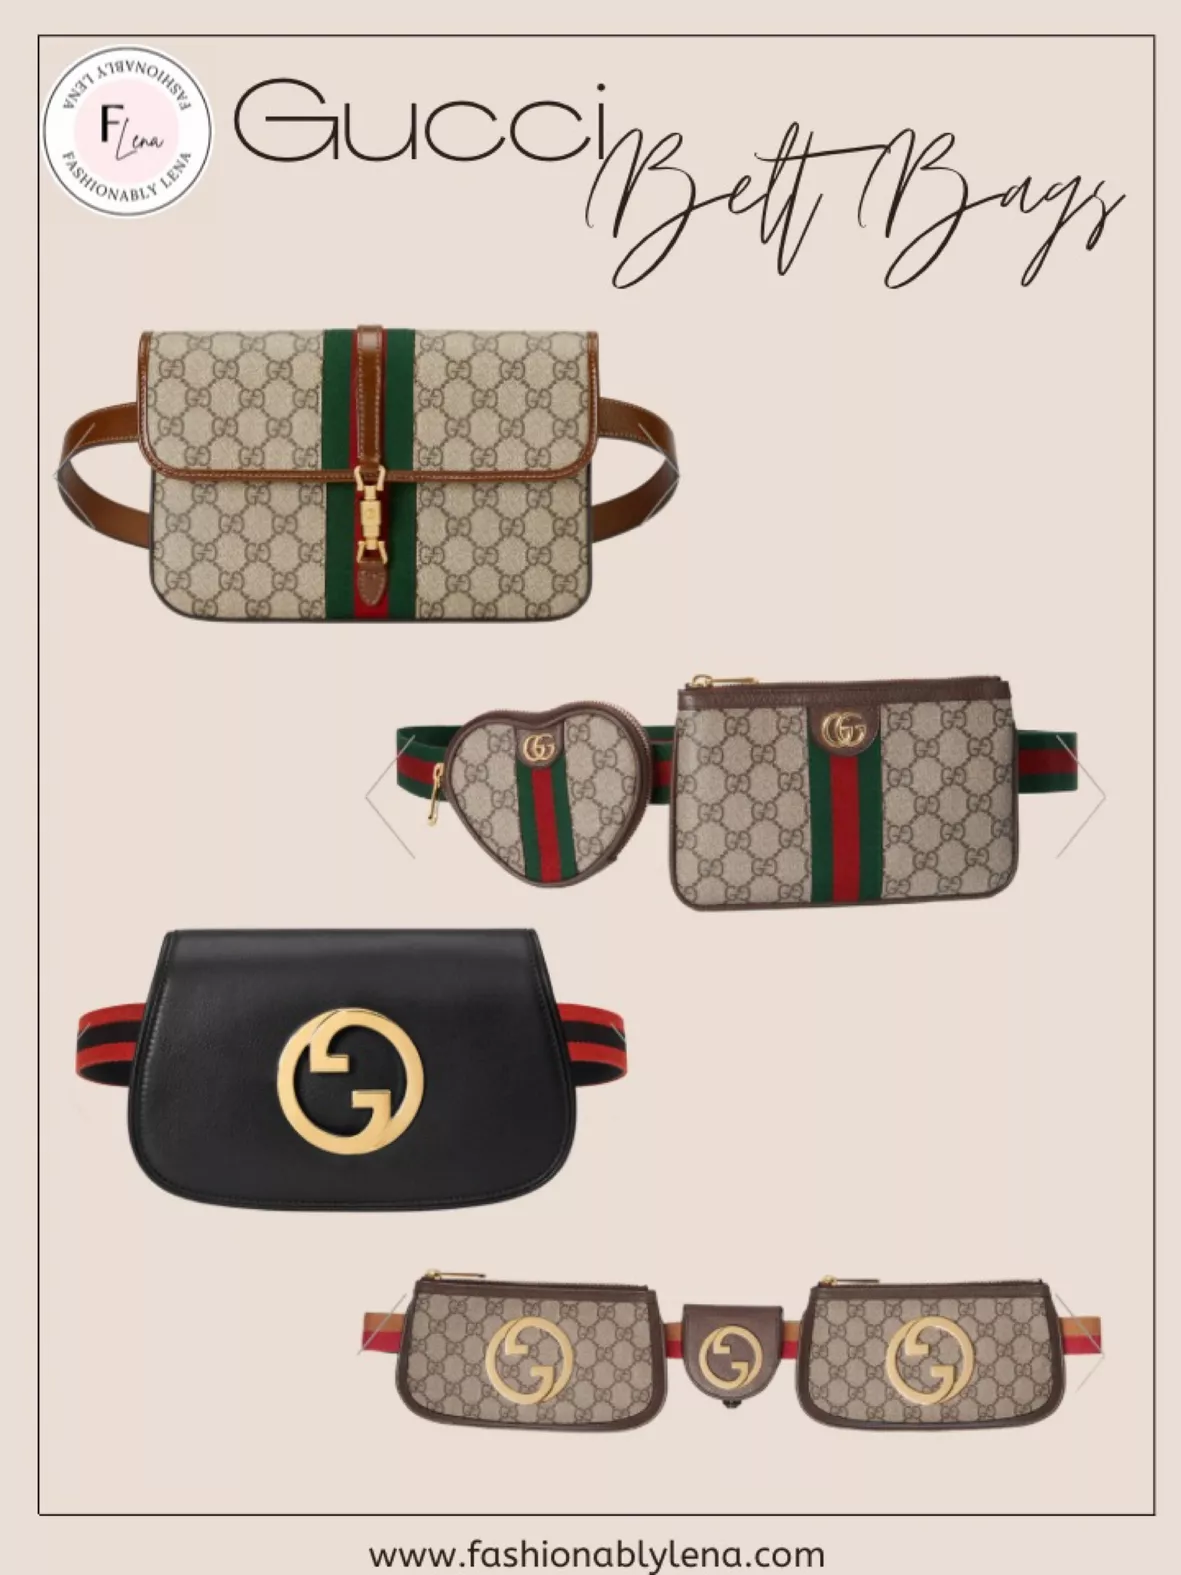 Mini Belt Bag curated on LTK